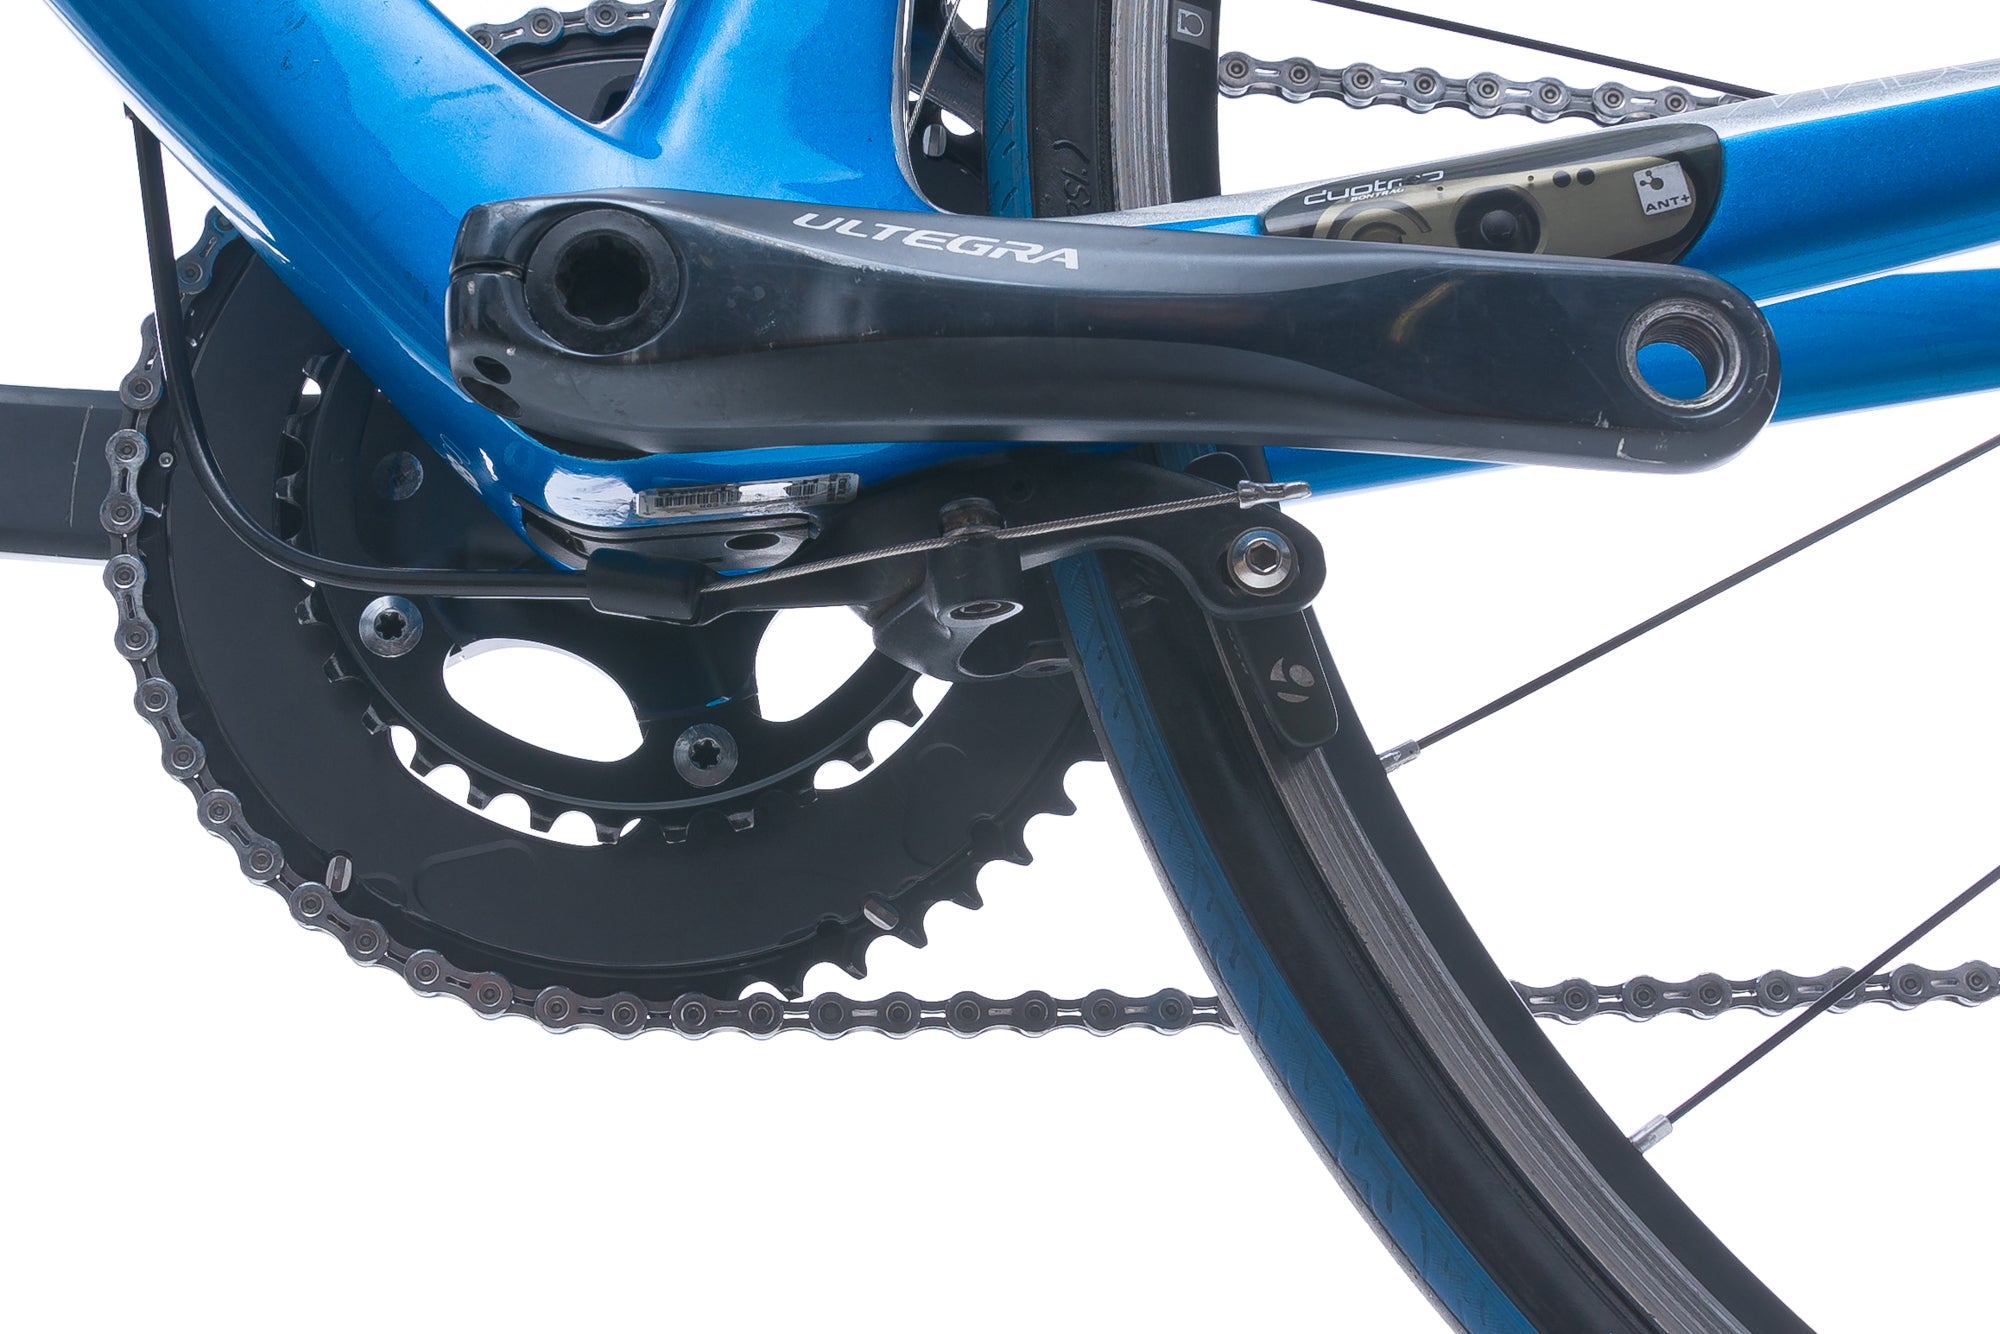 Trek Madone 6.2 H2 56cm Bike - 2013 detail 1